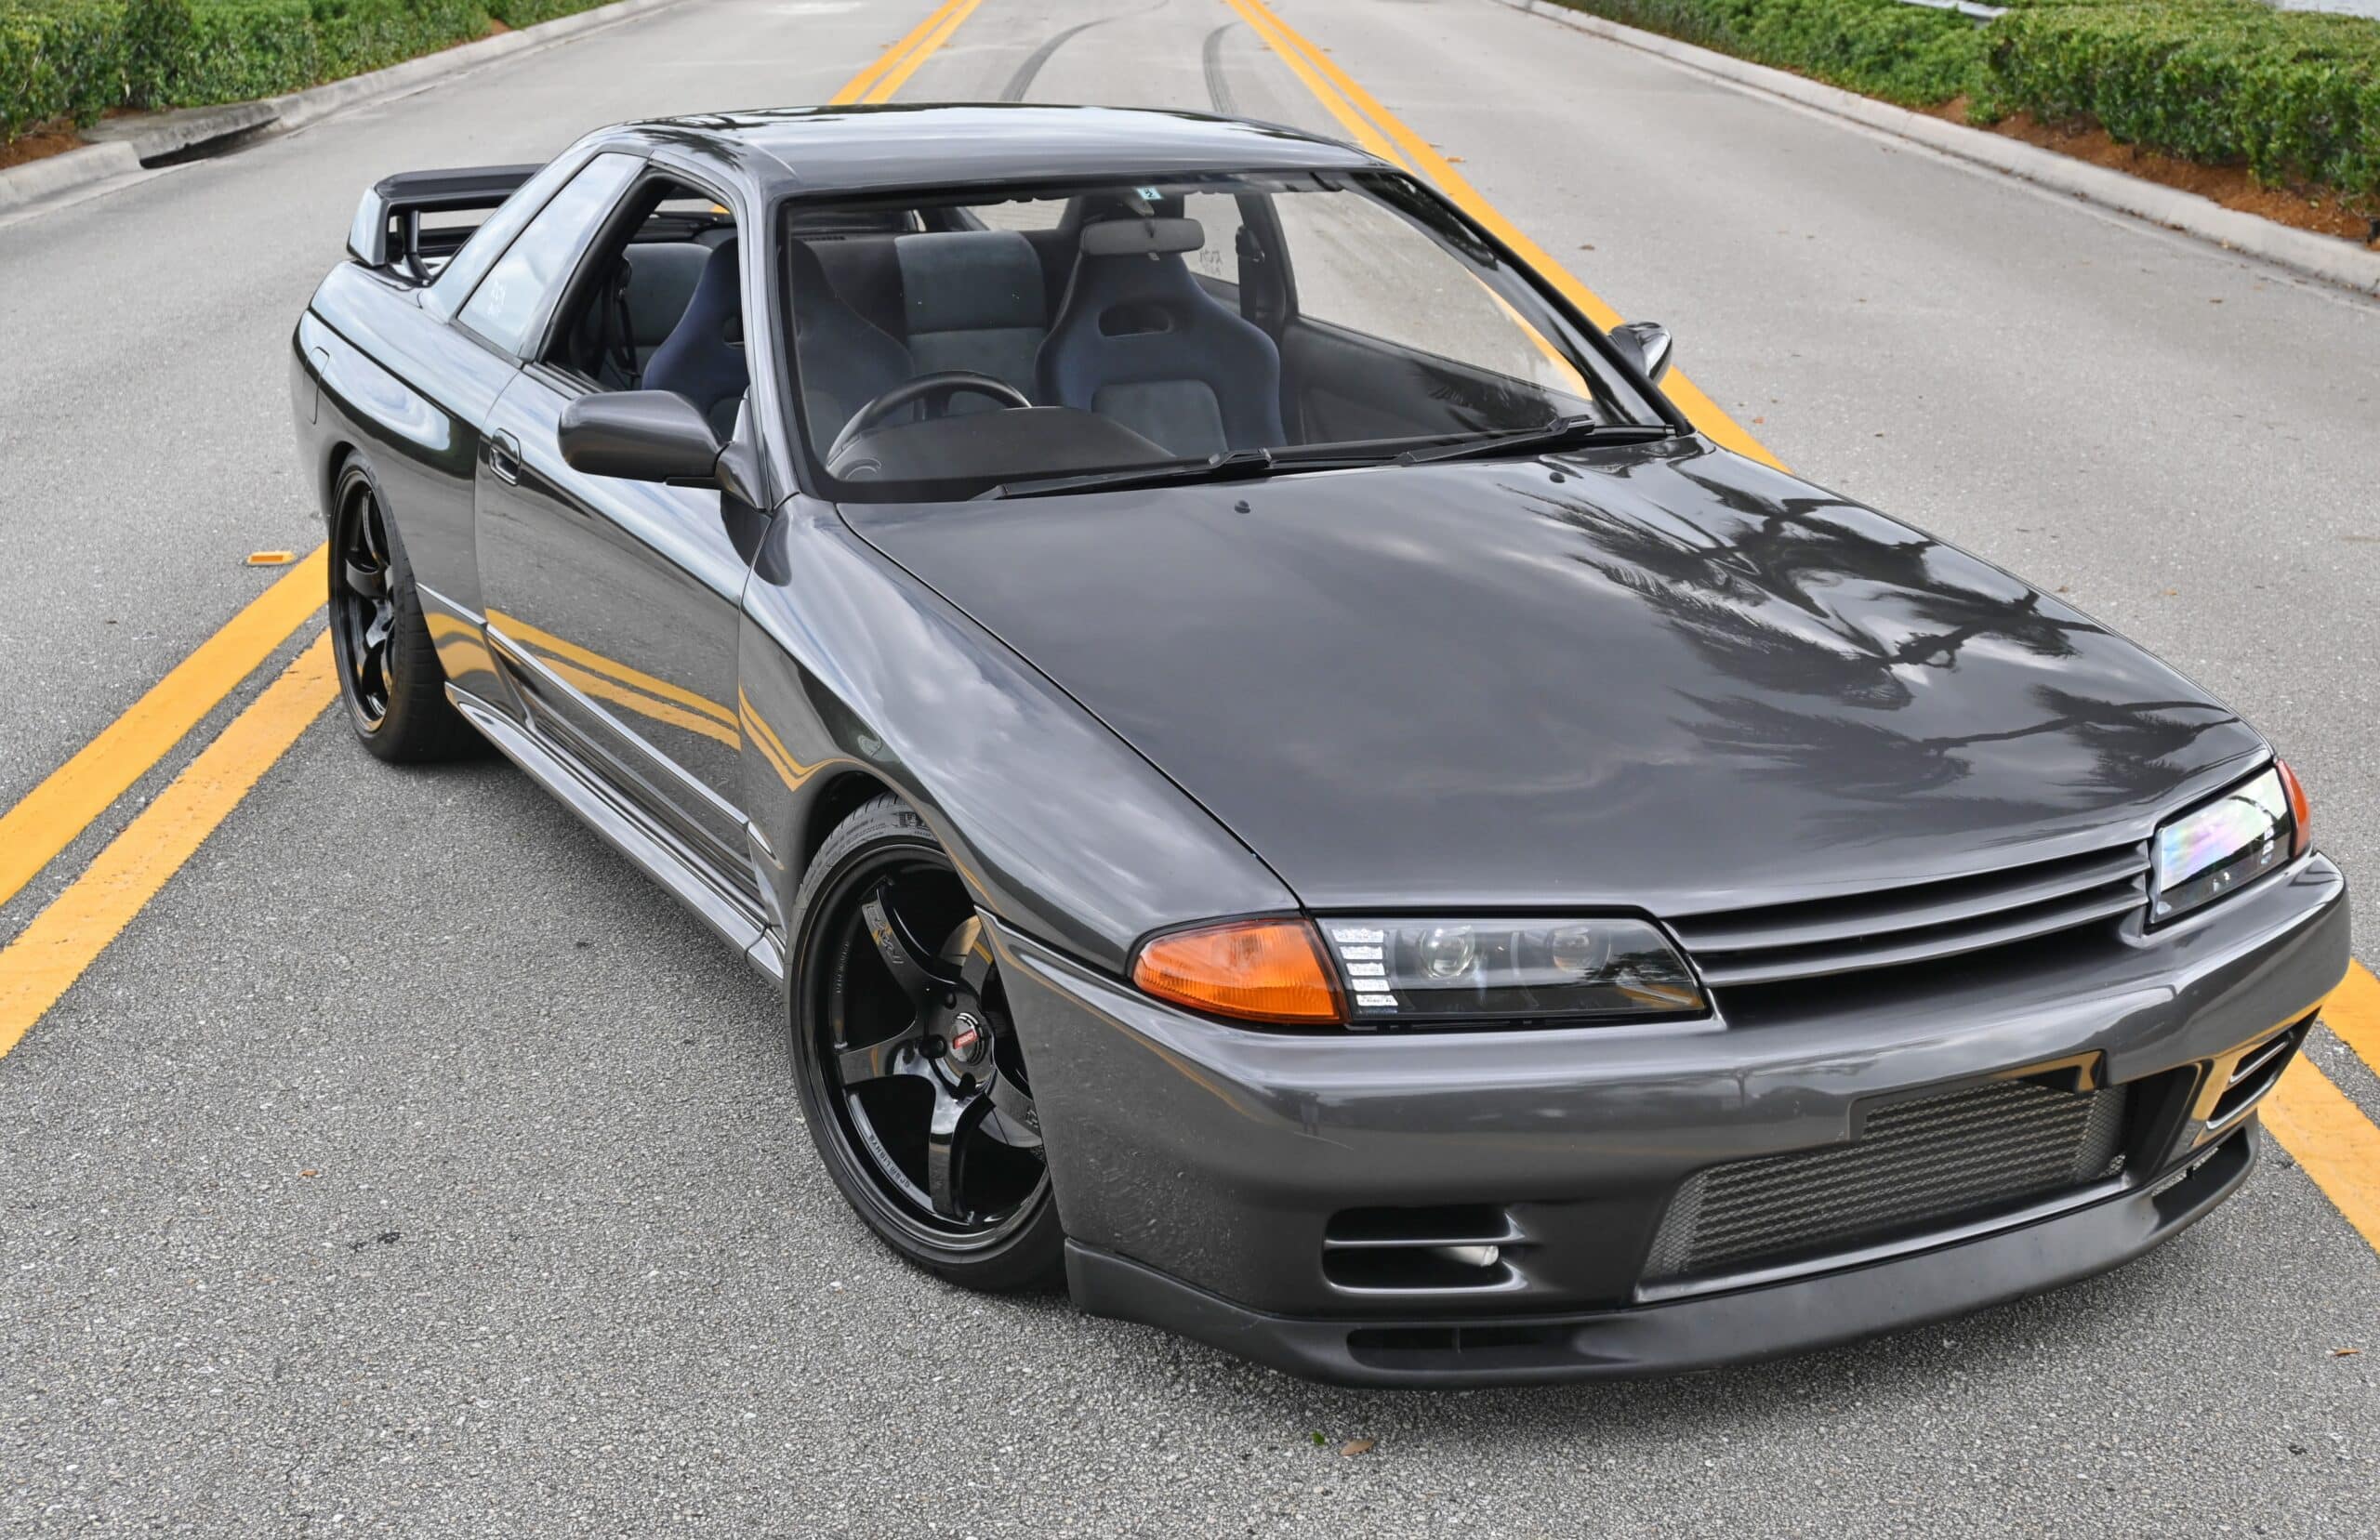 1991 Nissan GT-R R32 Skyline Built RB26 Single Turbo 600HP – Fully Sorted – Documented build – Turn Key R32